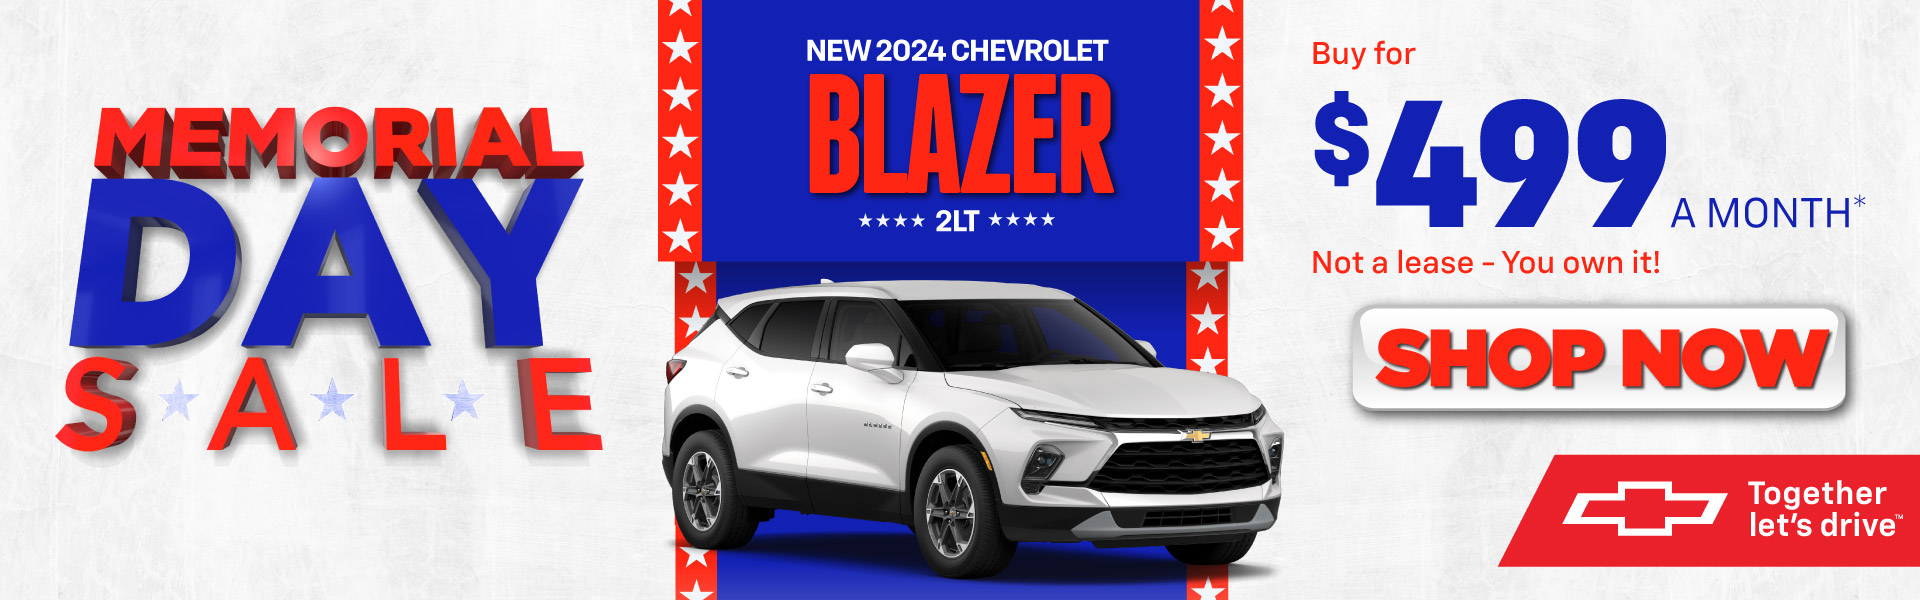 2024 Chevrolet Blazer 2LT - $499/mo* - Shop Now